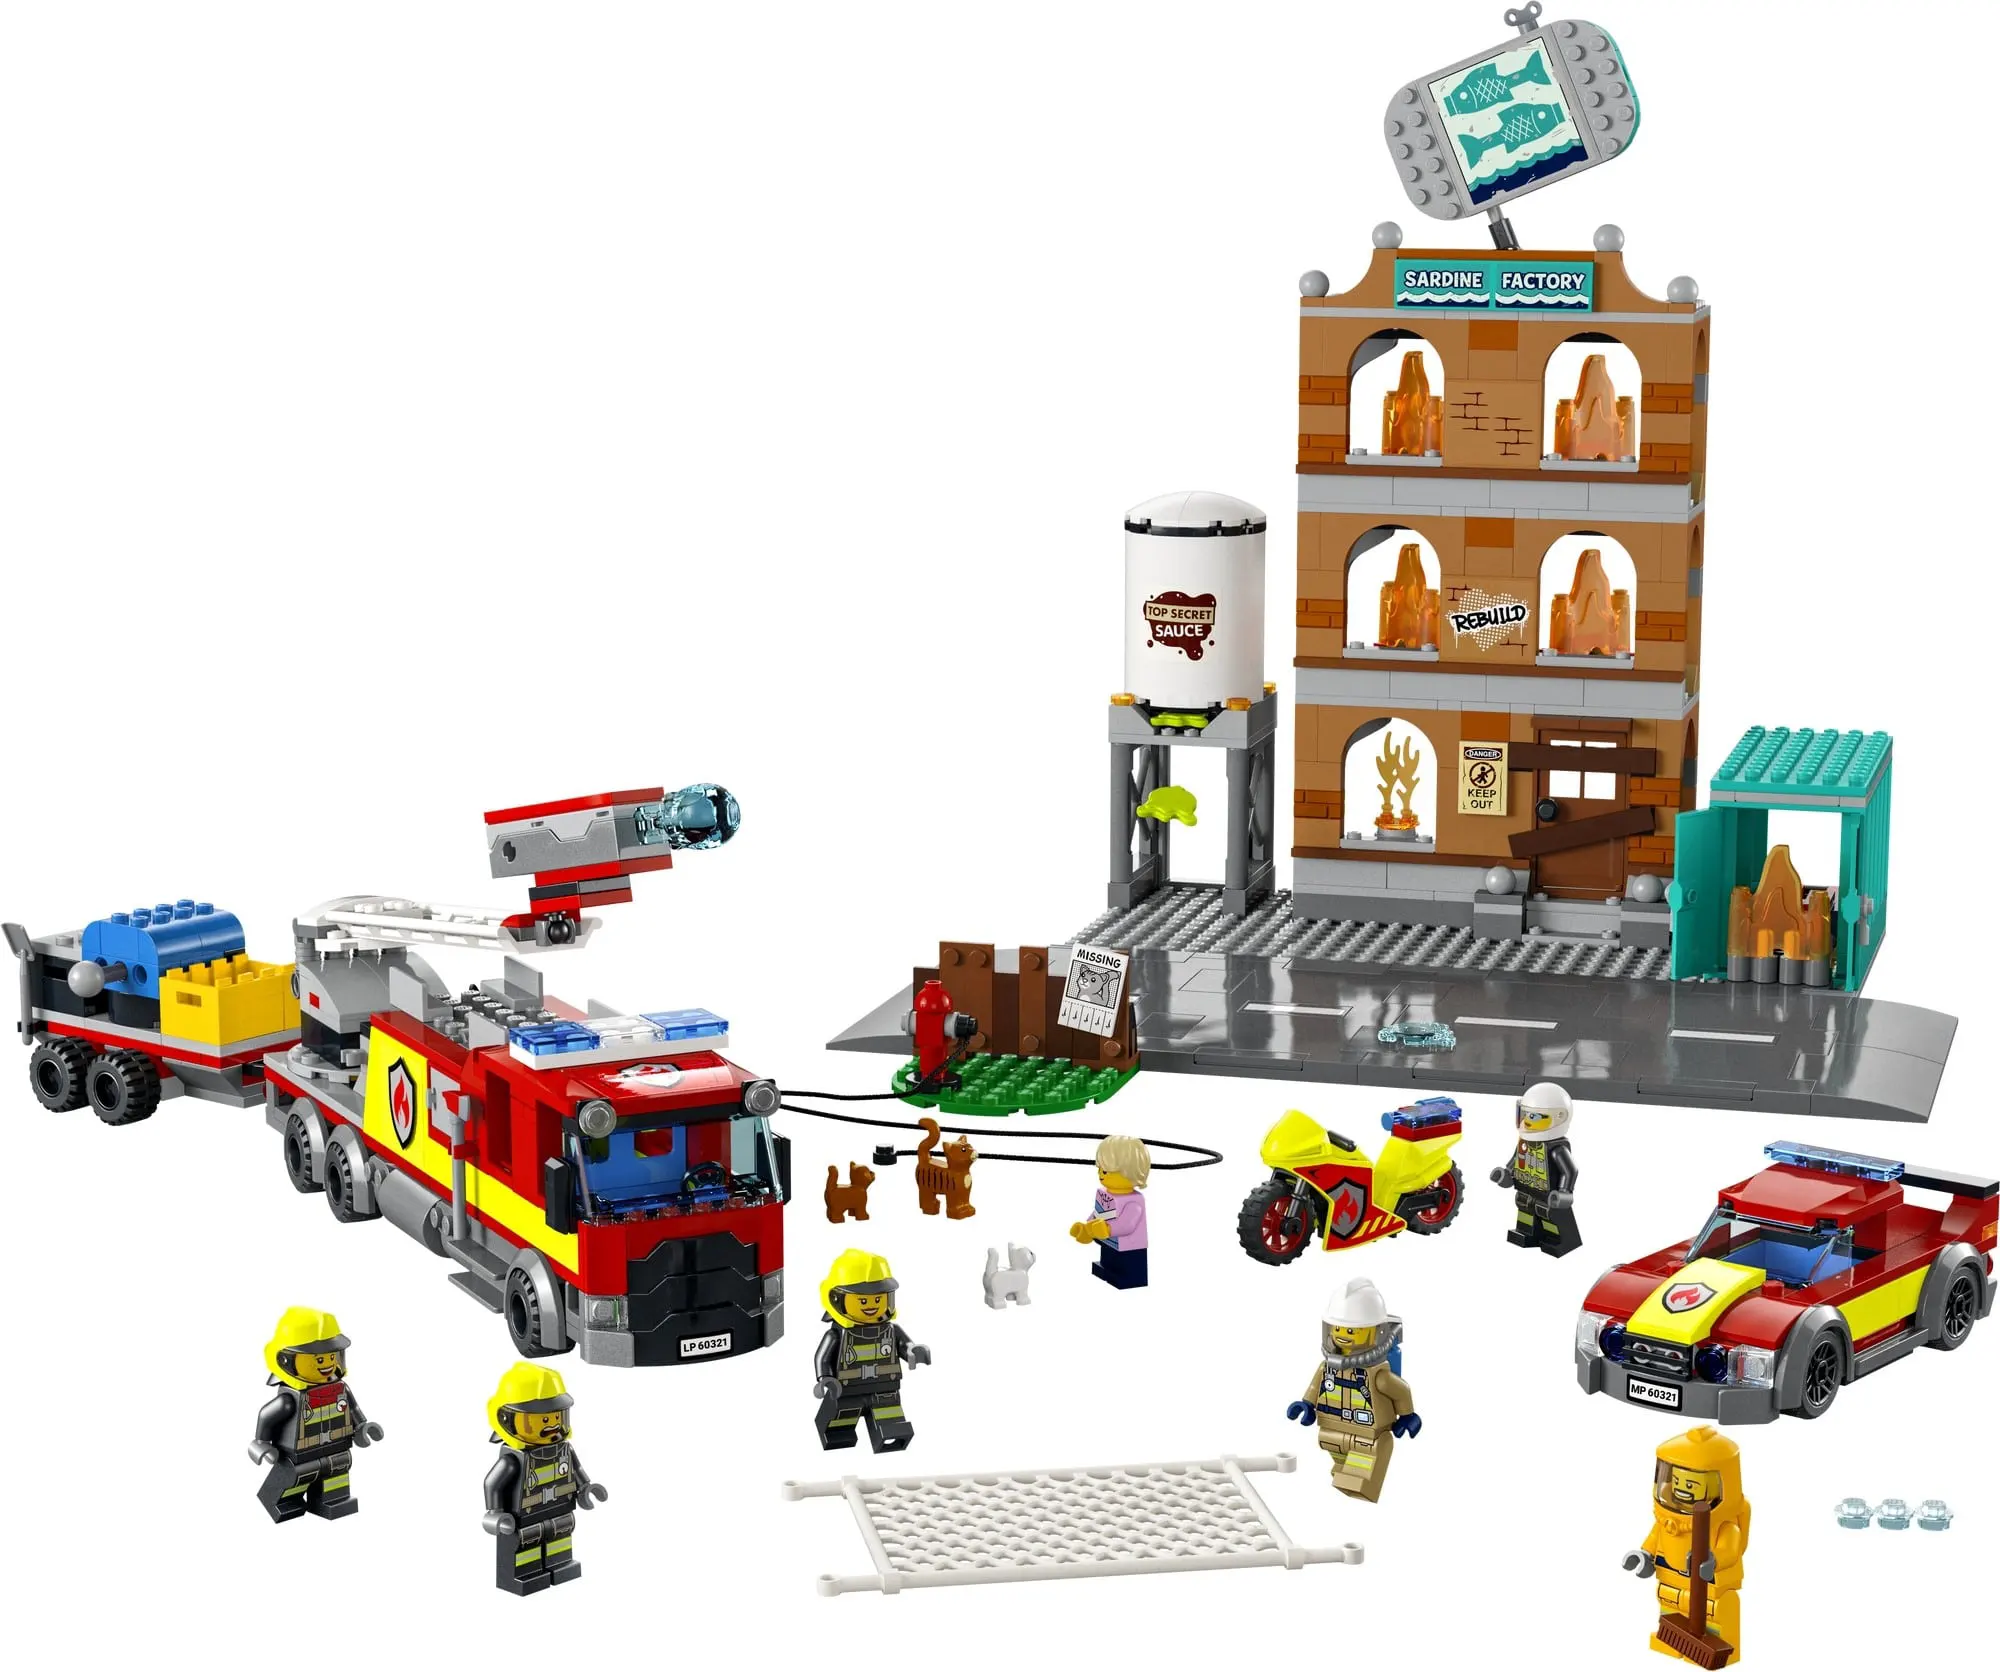 LEGO City New Sets for Jan. 1st 2022 Revealed | Hospital, Lunar Research Base, Police, Fire